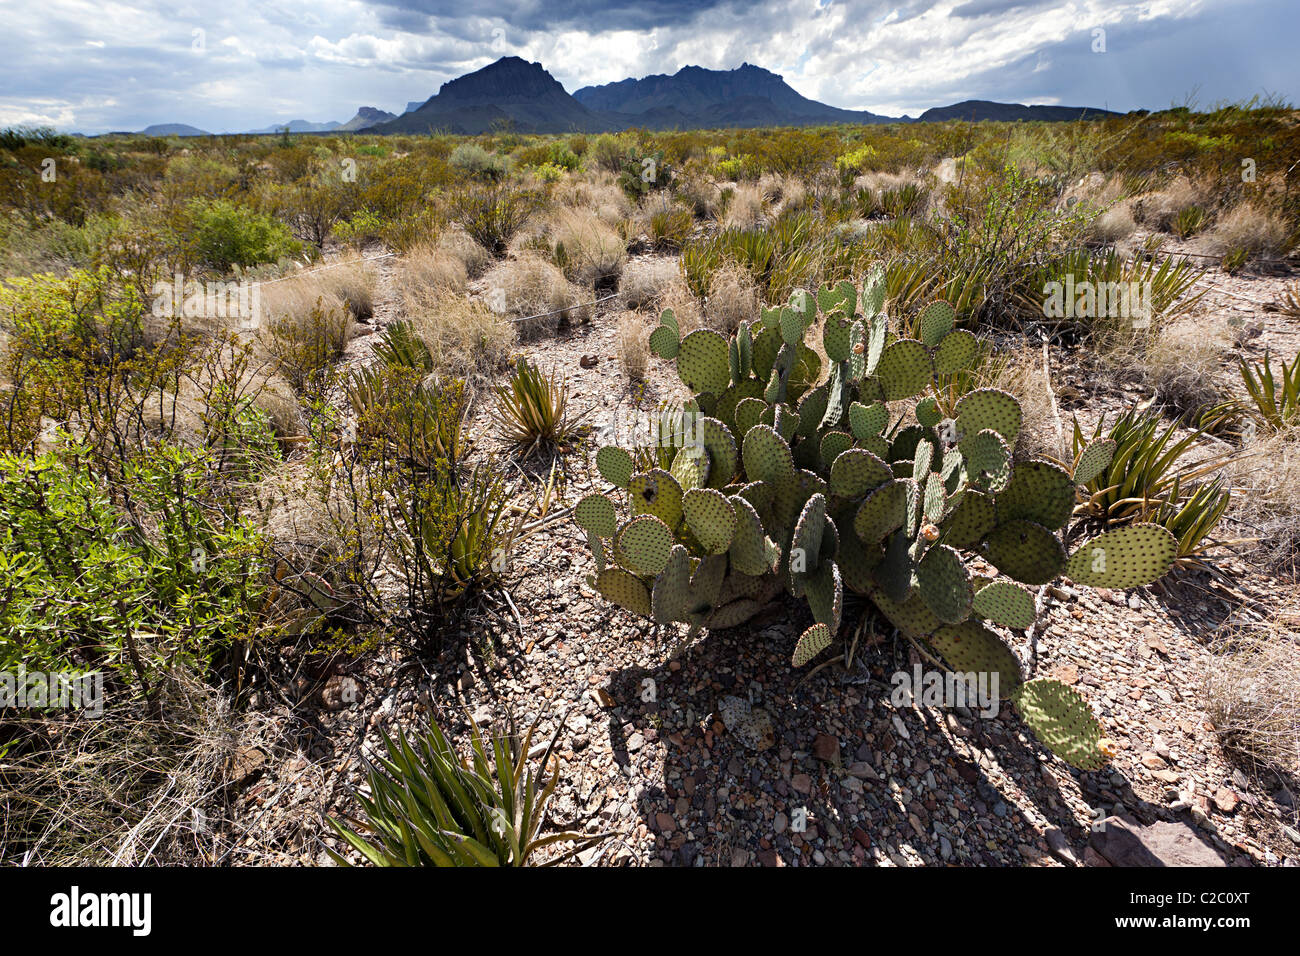 Feigenkaktus Opuntia Kaktus in der Wüste Big Bend Nationalpark Texas USA Stockfoto